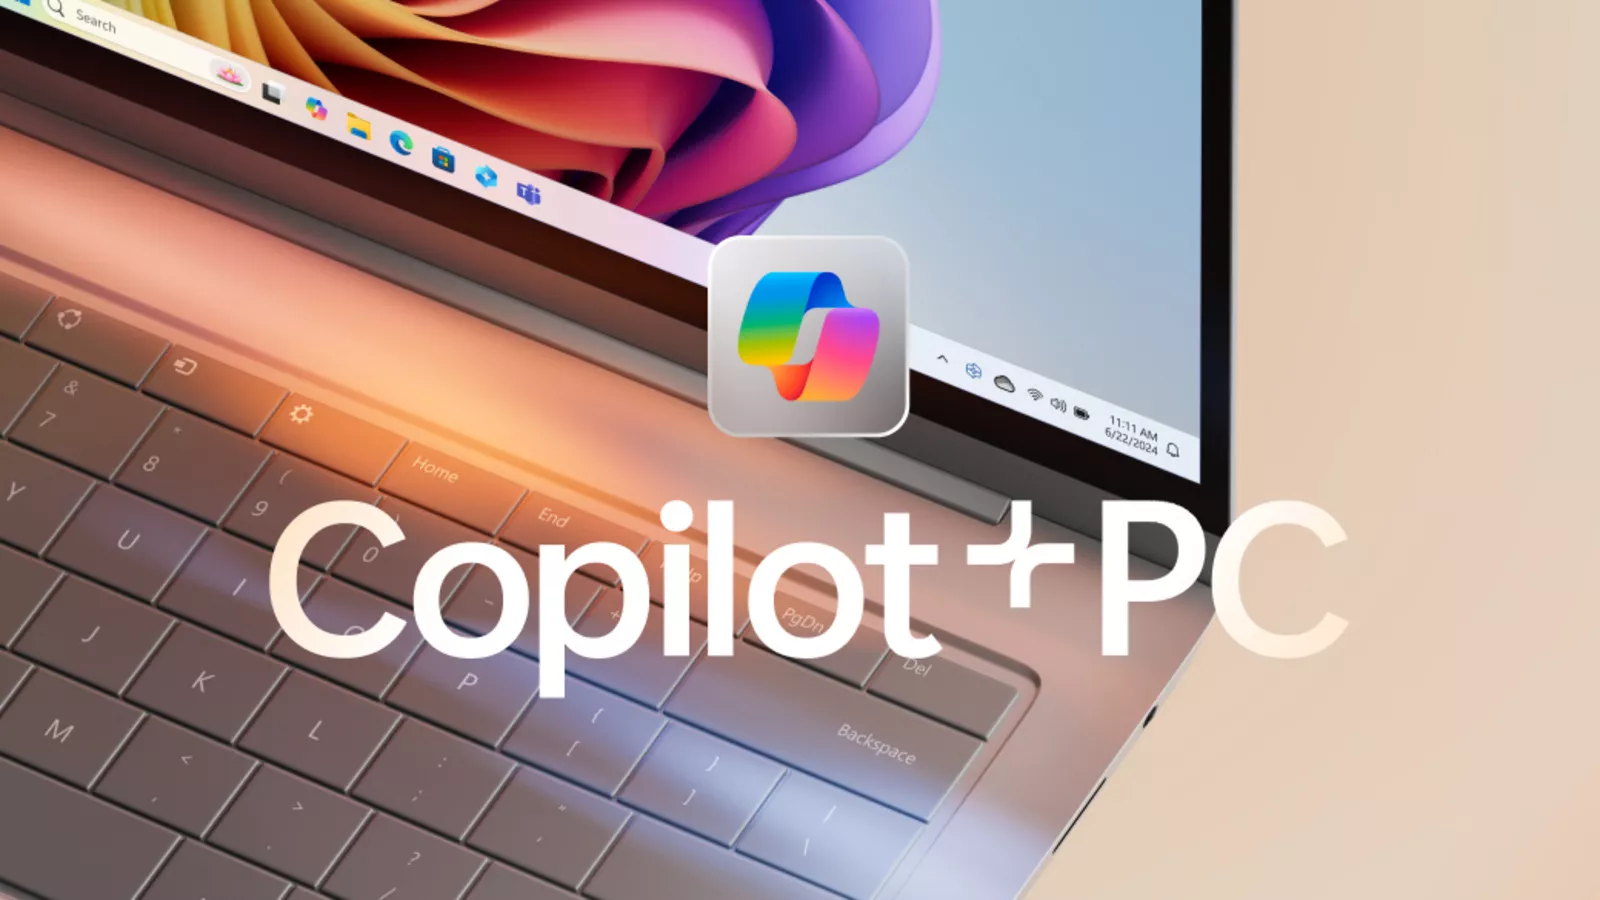 Image of the Copilot+ PCs branding